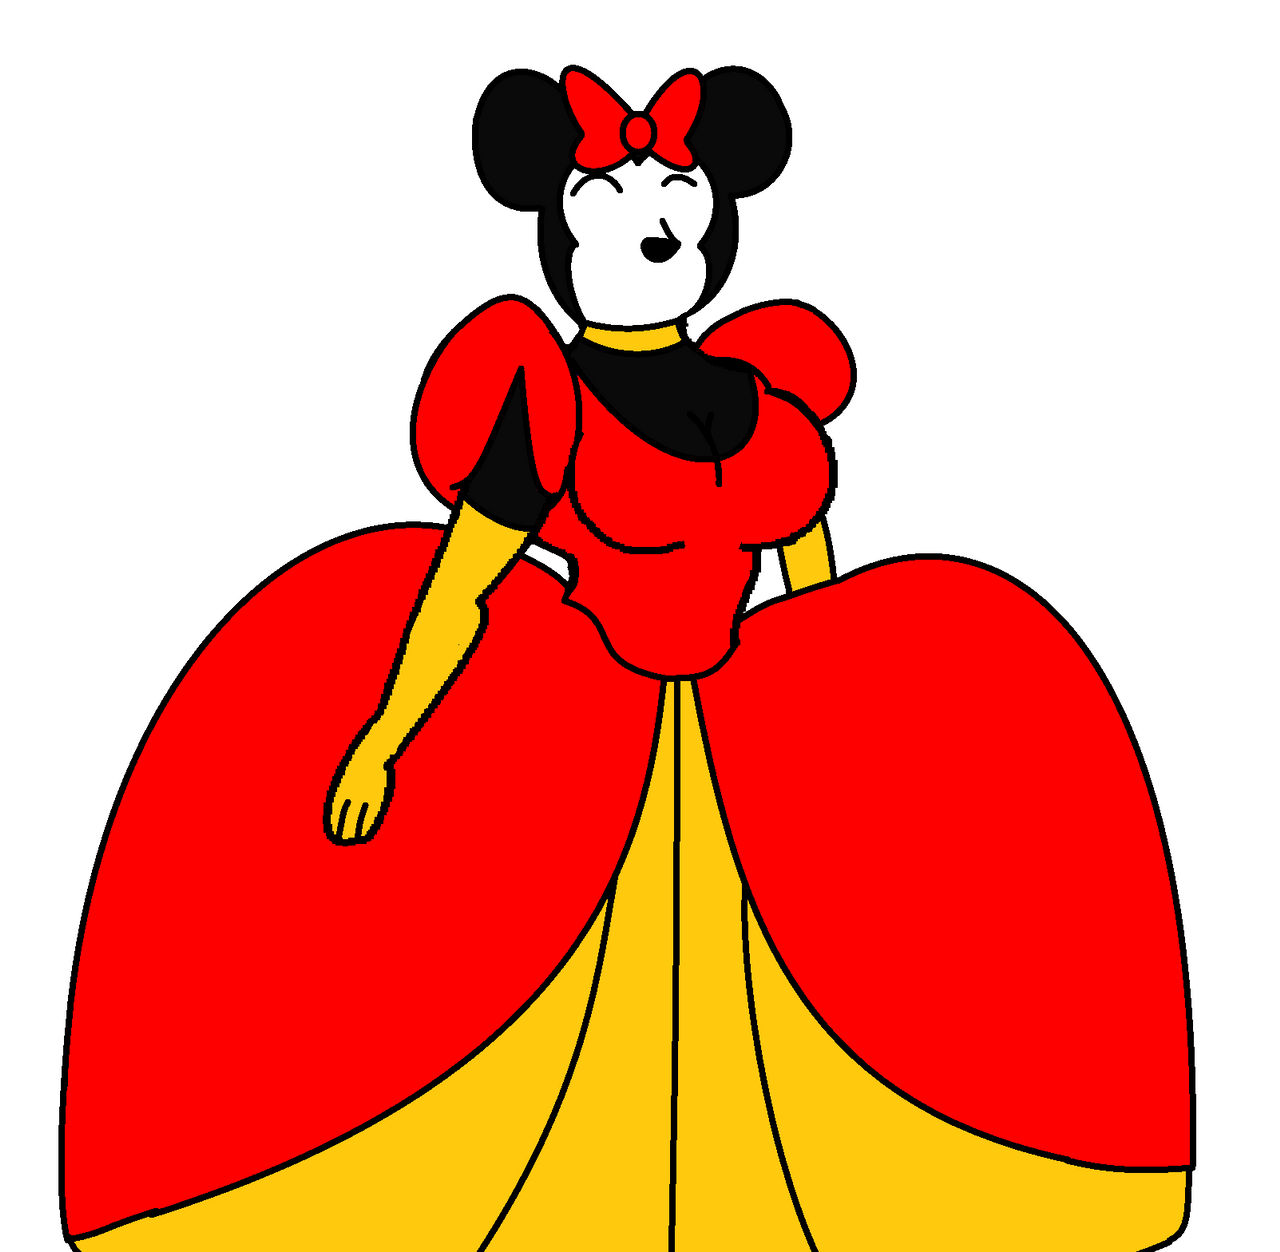 Princess Minnie Mouse by BASEDCUBE95 on DeviantArt